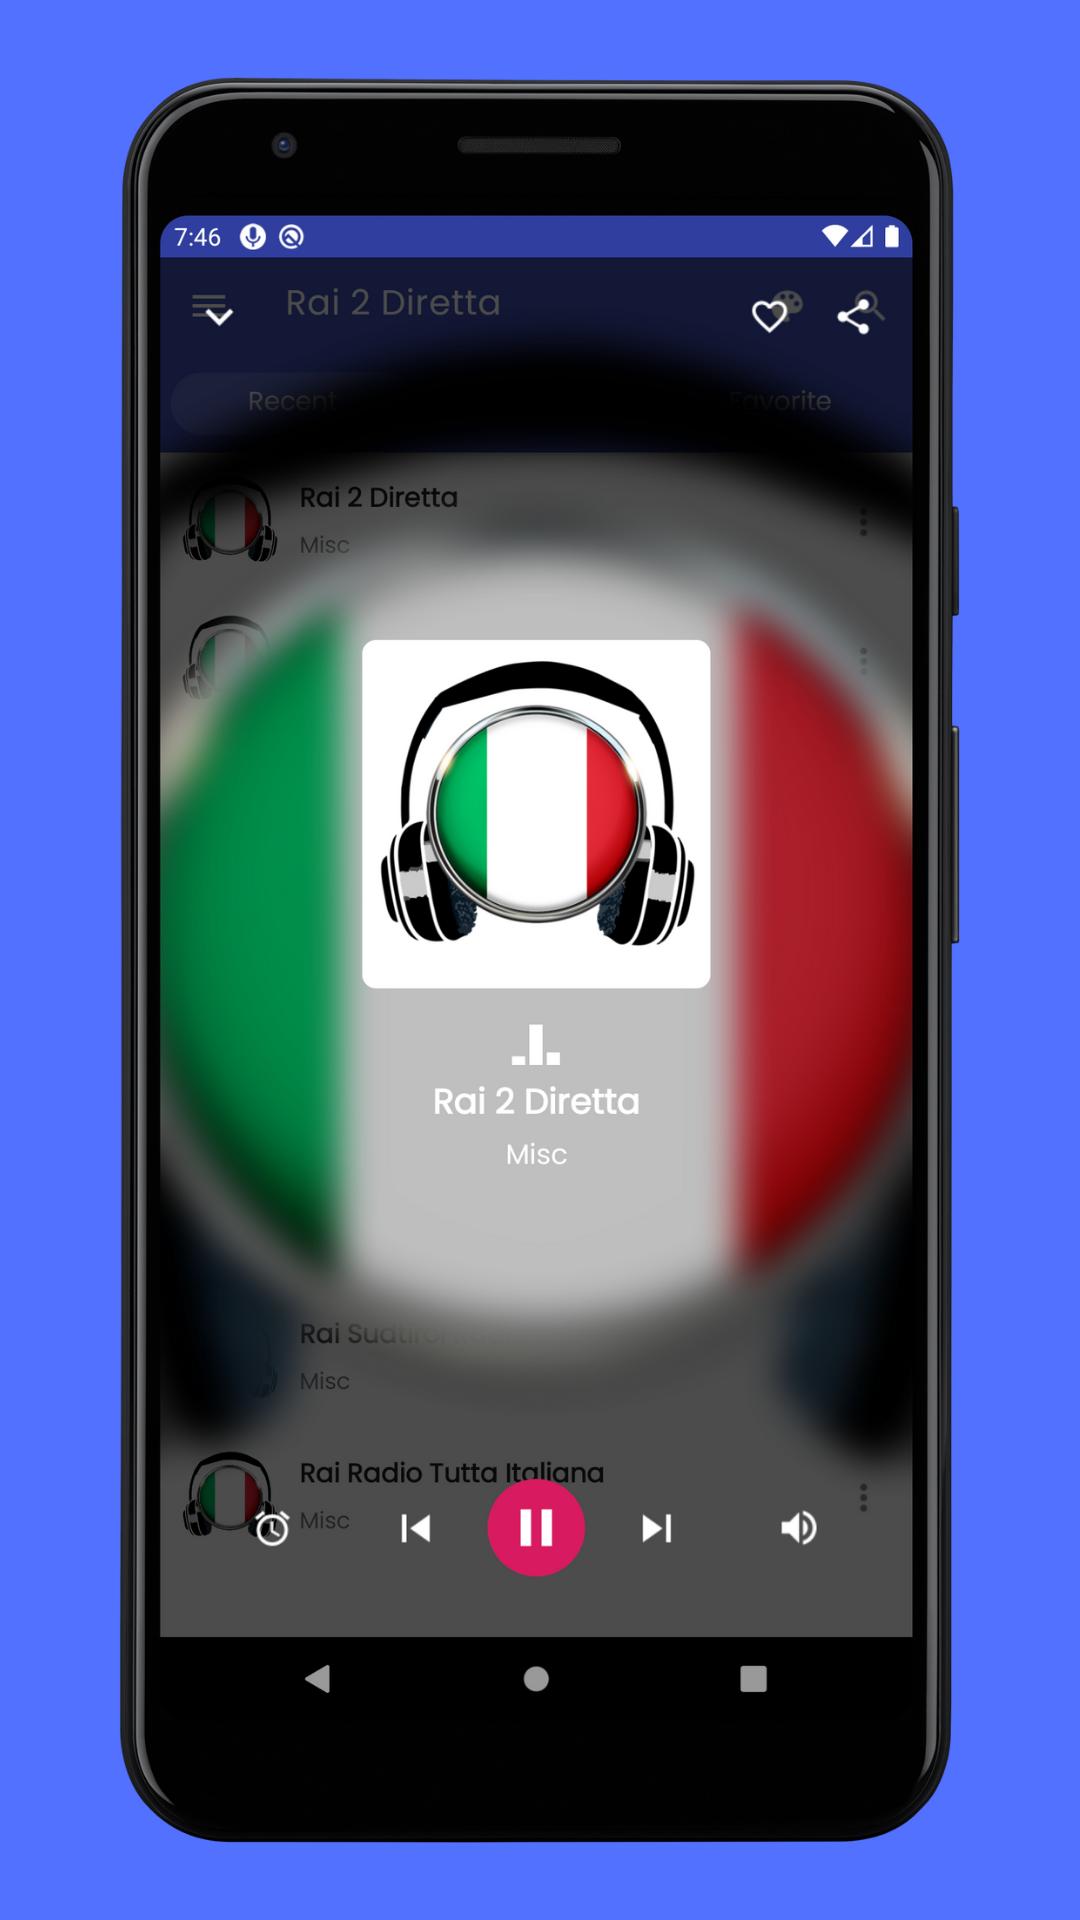 Rai 2 Diretta for Android - APK Download